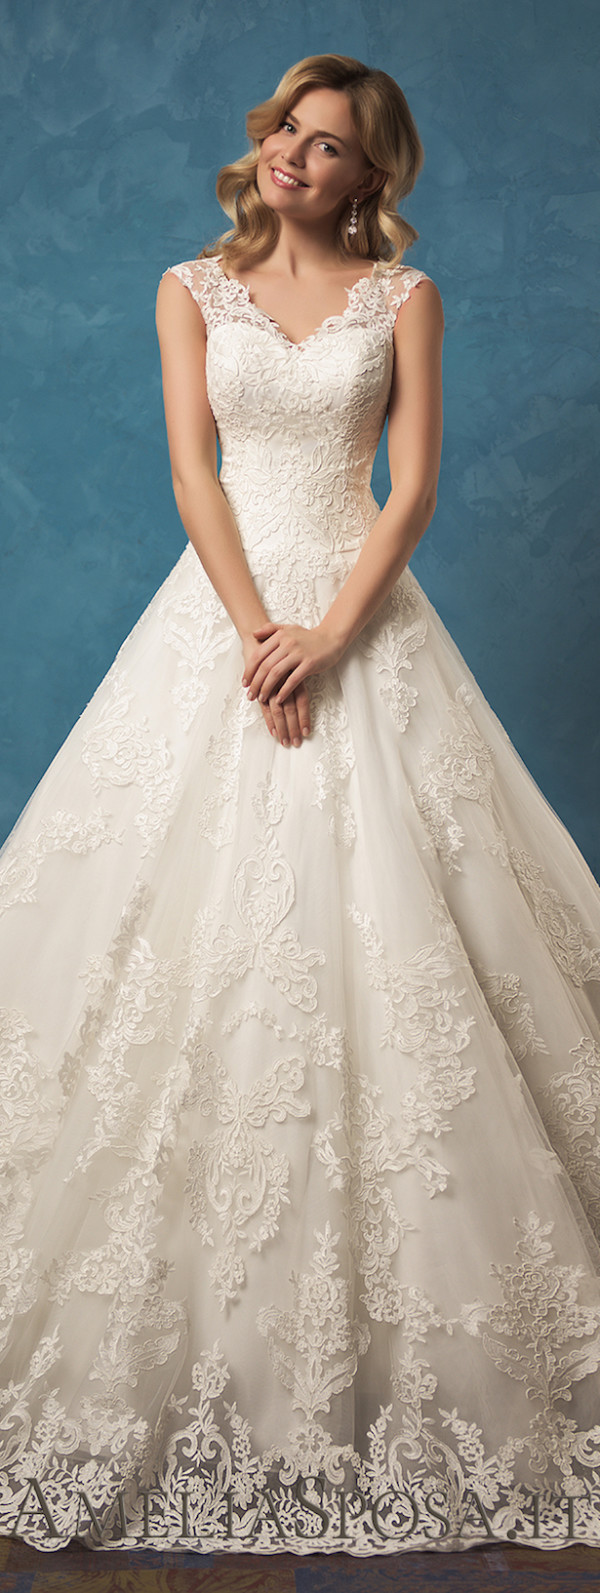 Amelia Sposa 2017 Wedding Dresses 